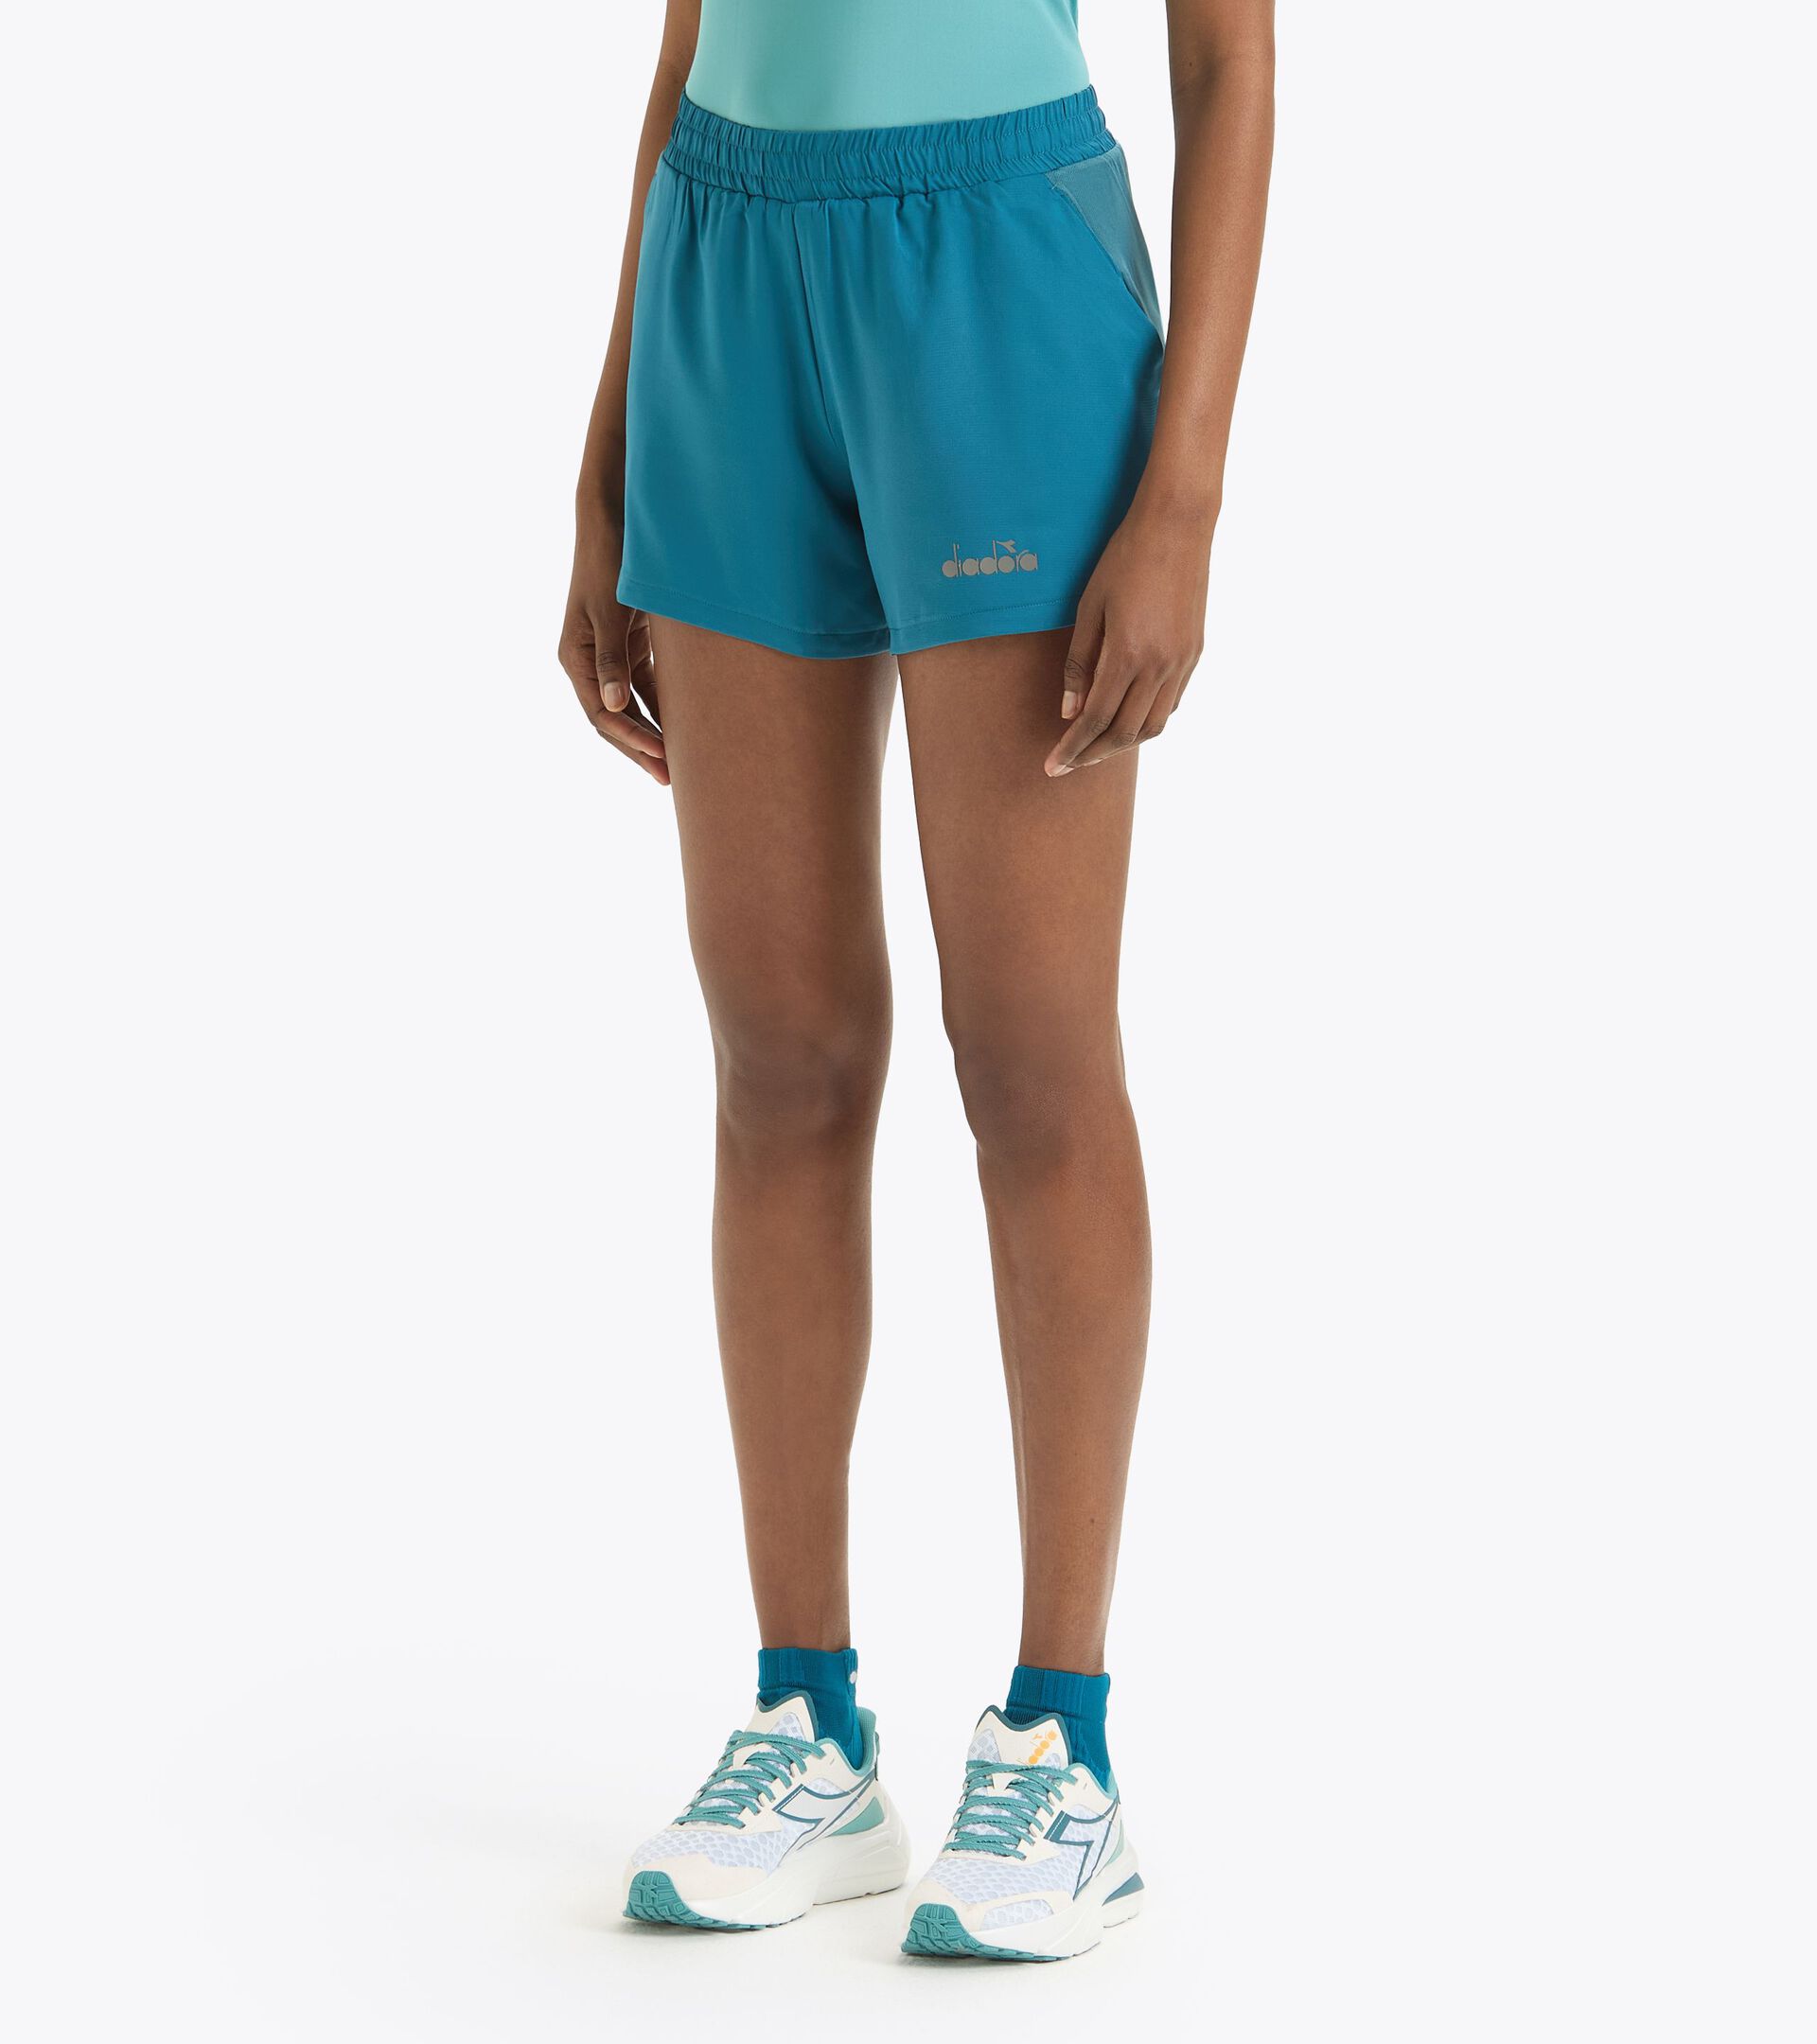 4’’ running shorts - Light fabric - Women’s
 L. SUPER LIGHT SHORTS 4" COLONIAL BLUE - Diadora